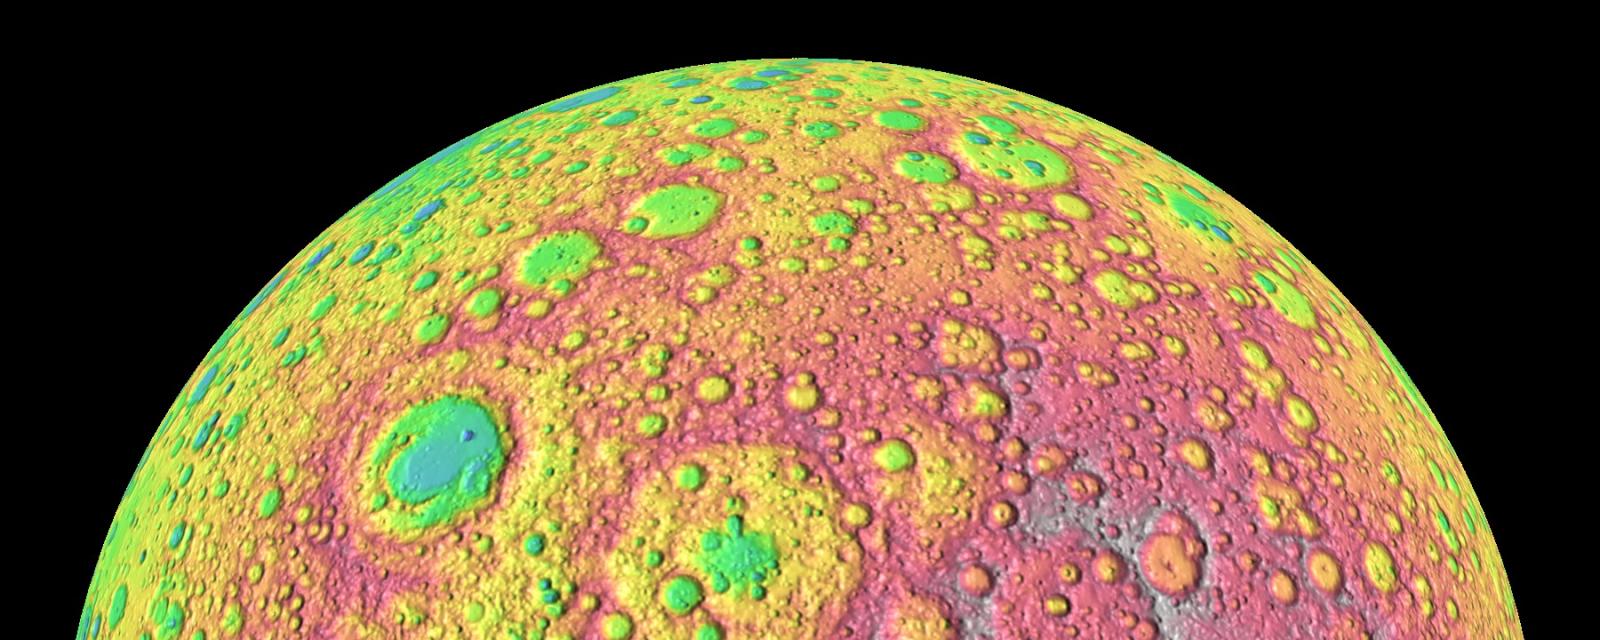 representational image of lunar surface 